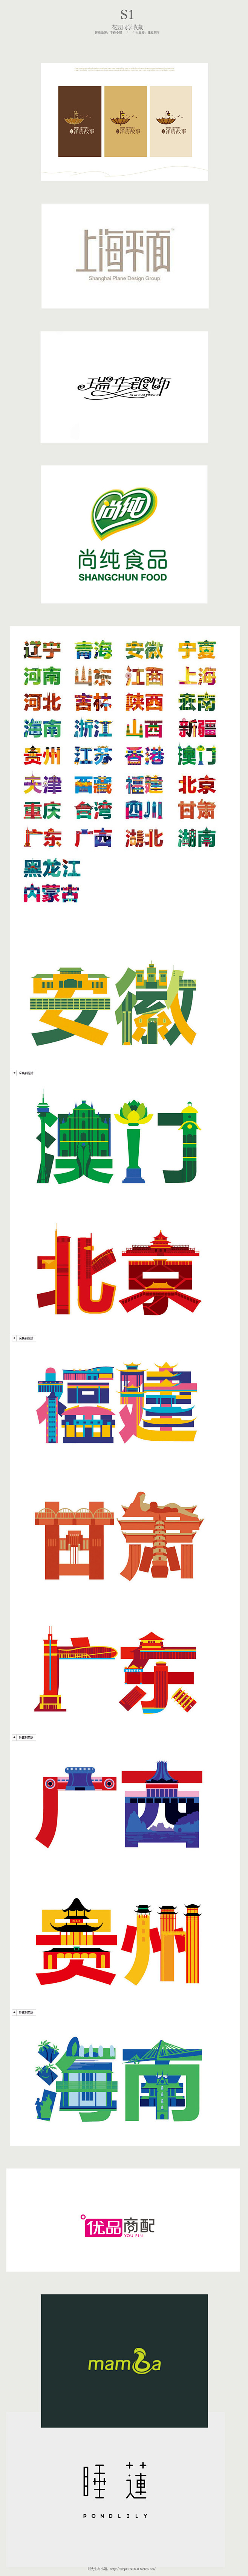 S1—logo：洋房故事、上海平面、瑞华...